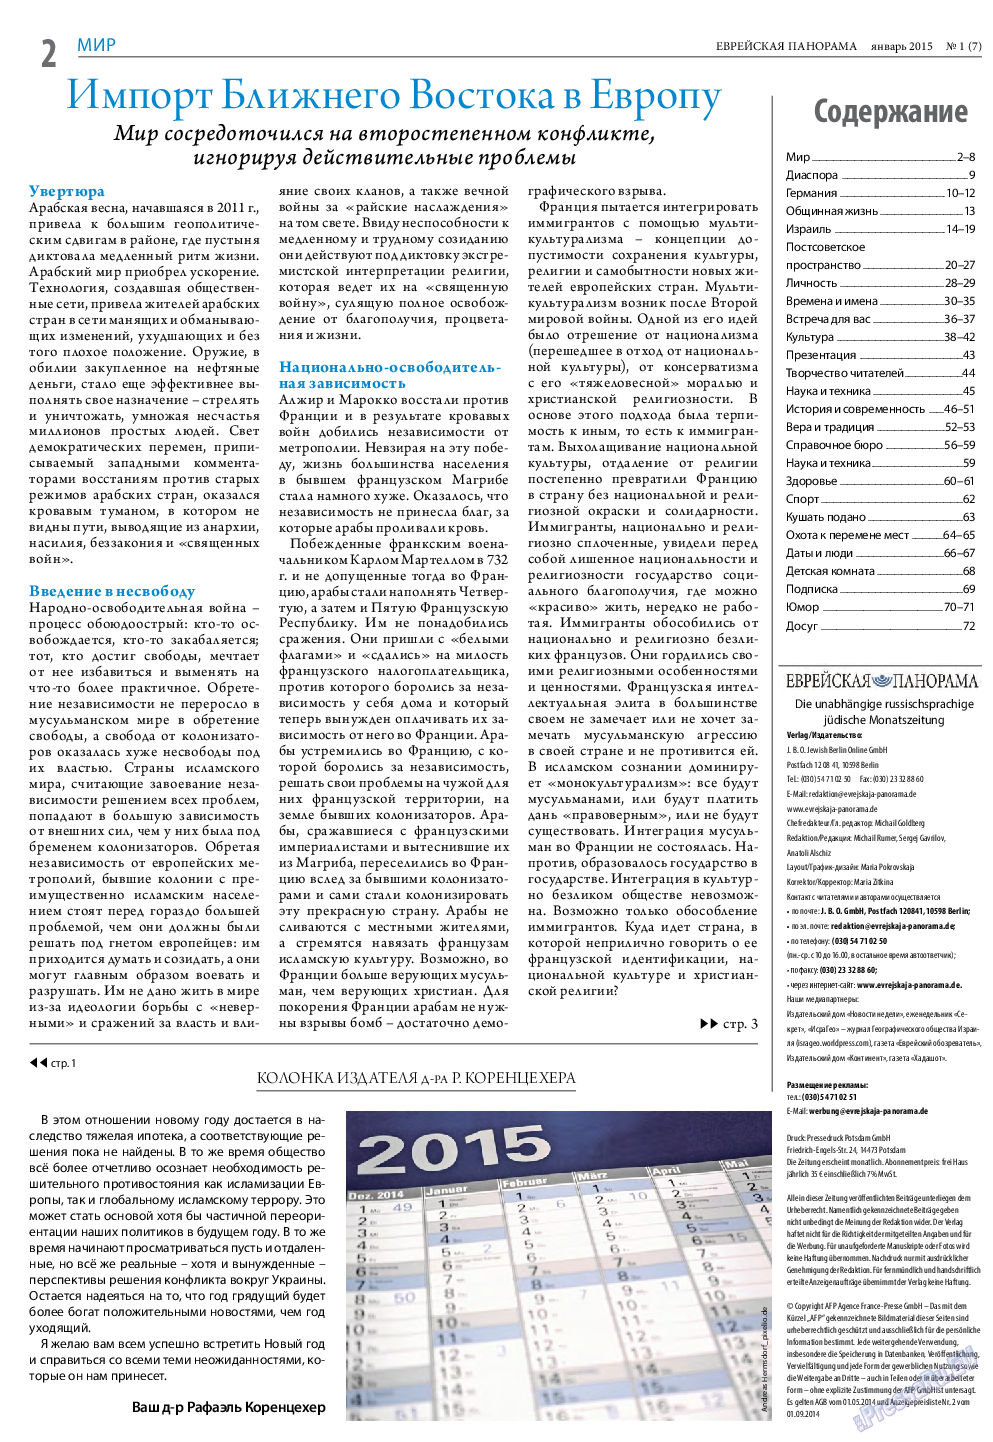 Еврейская панорама, газета. 2015 №1 стр.2